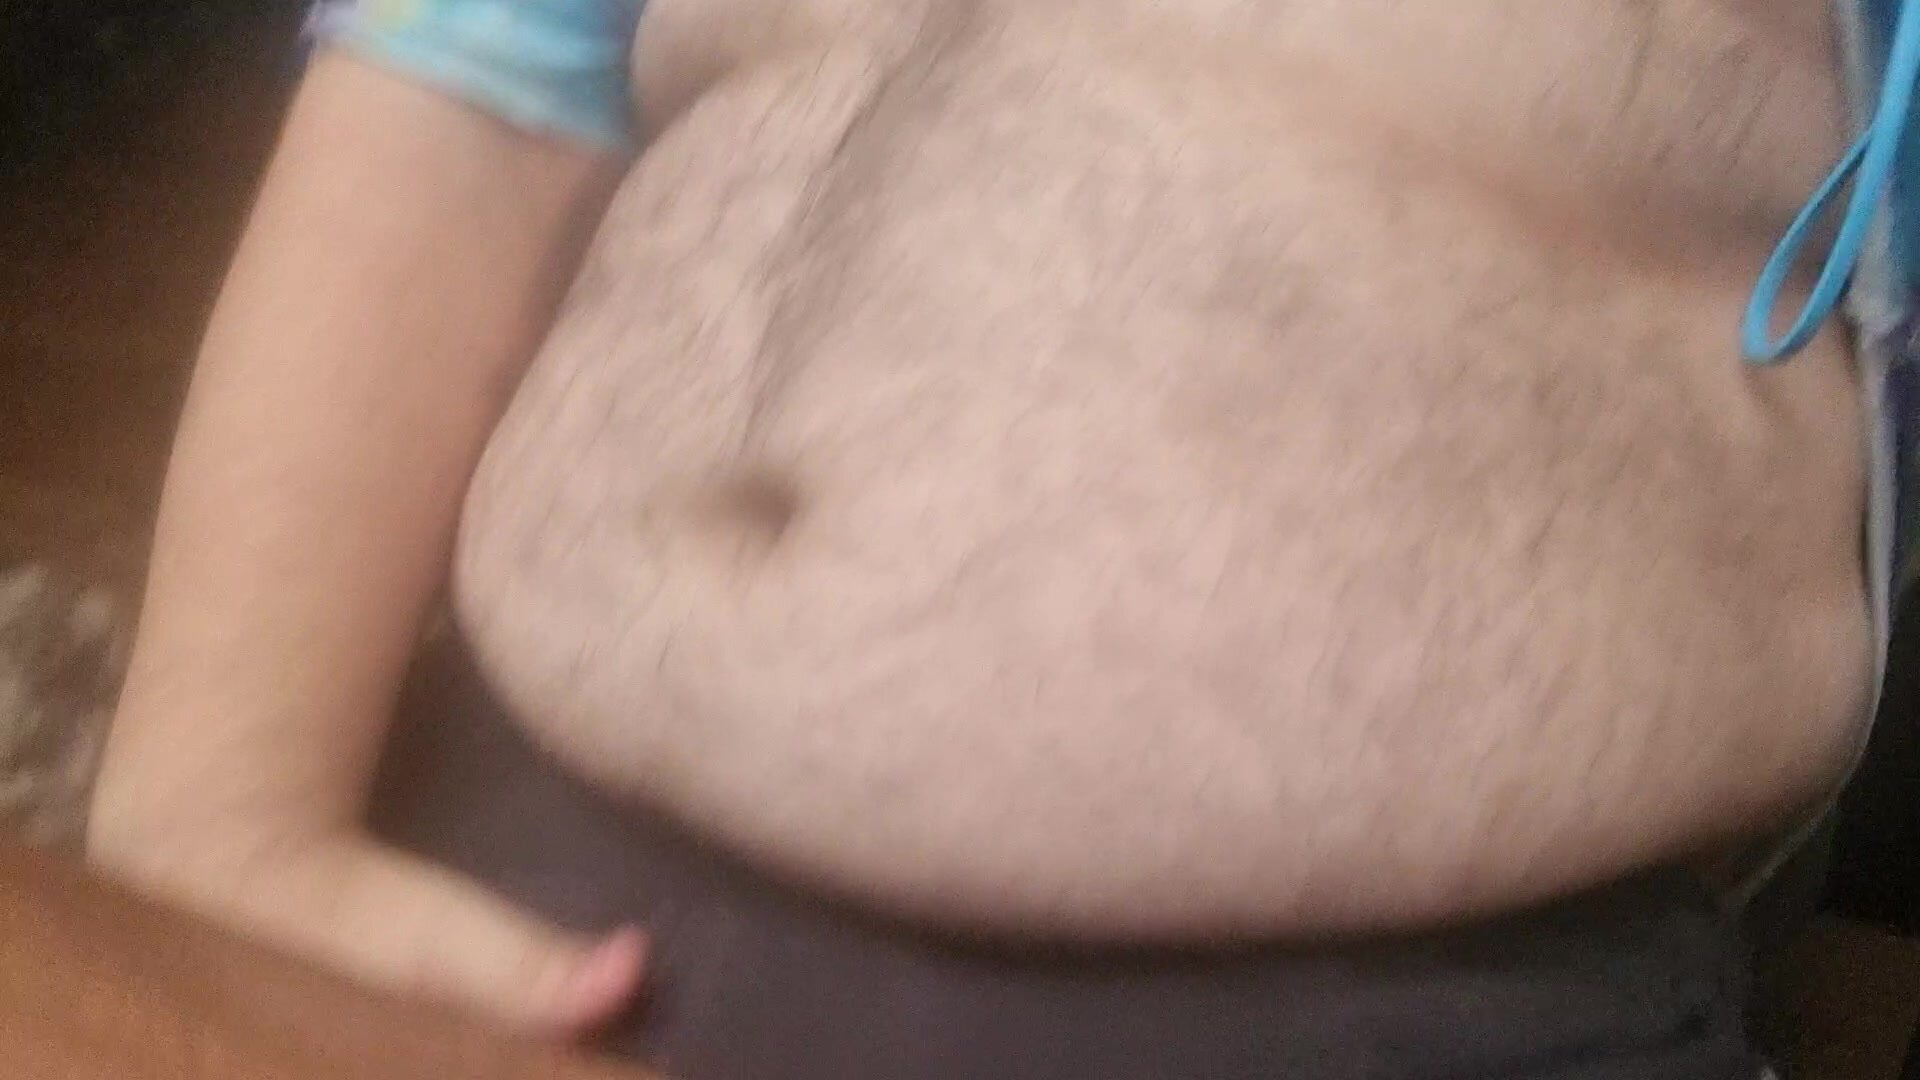 Rubbing belly - video 2